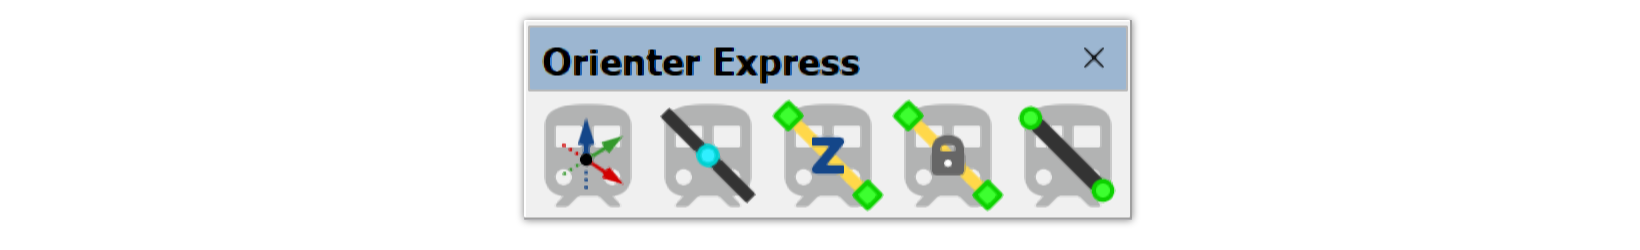 Orienter Express: barra de herramientas